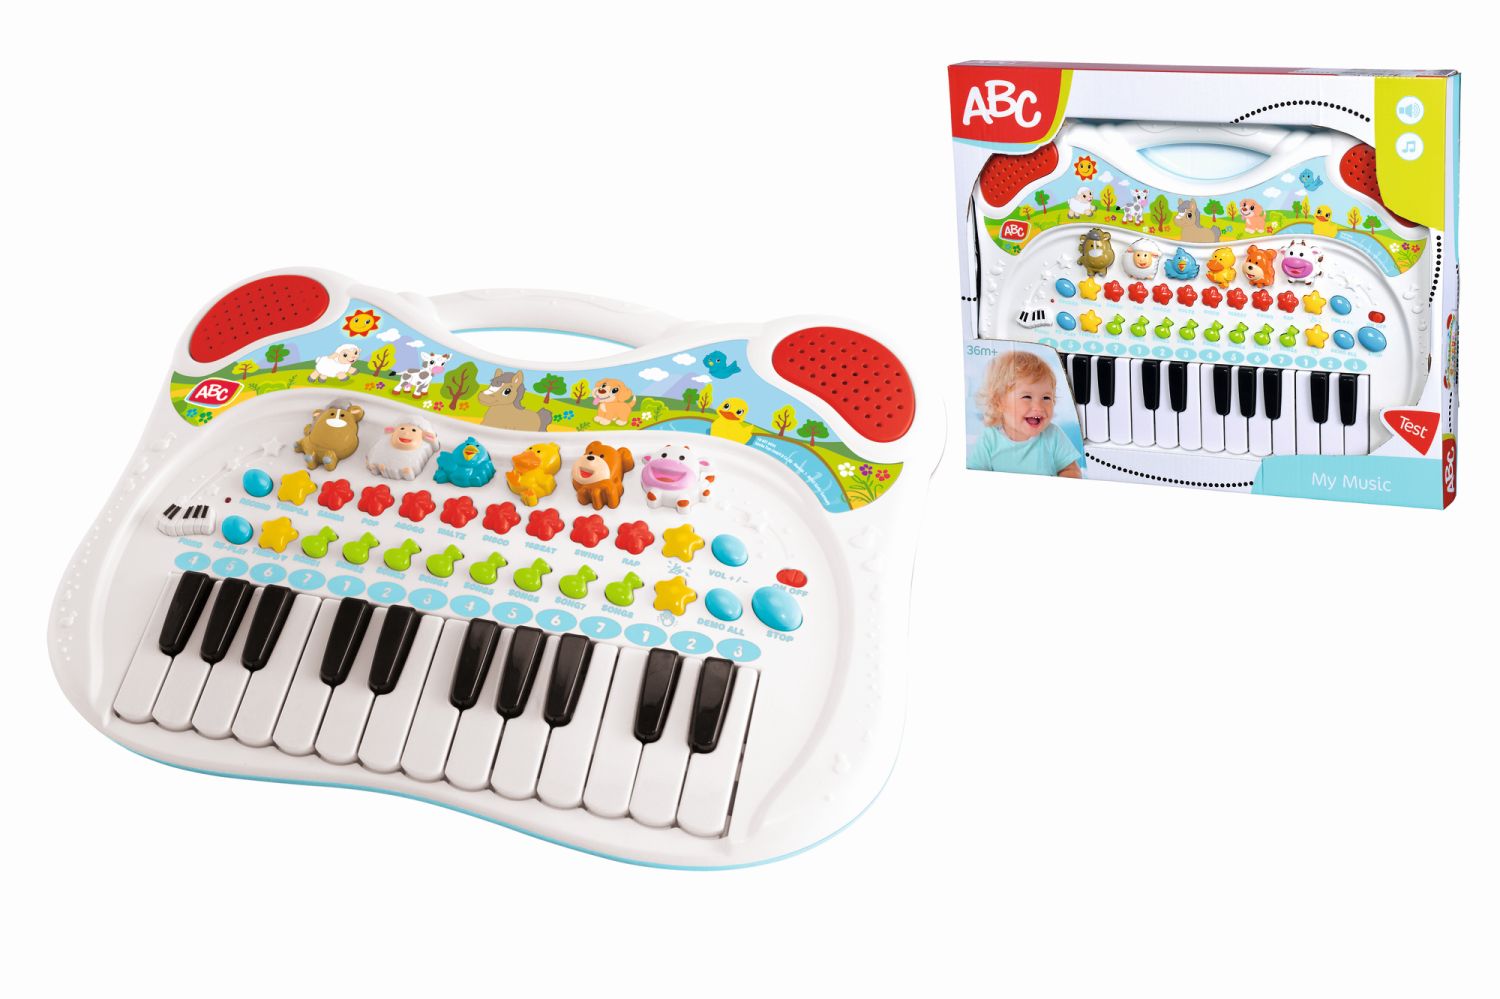 Simba Toys Keyboard 104010044 ABC Tier